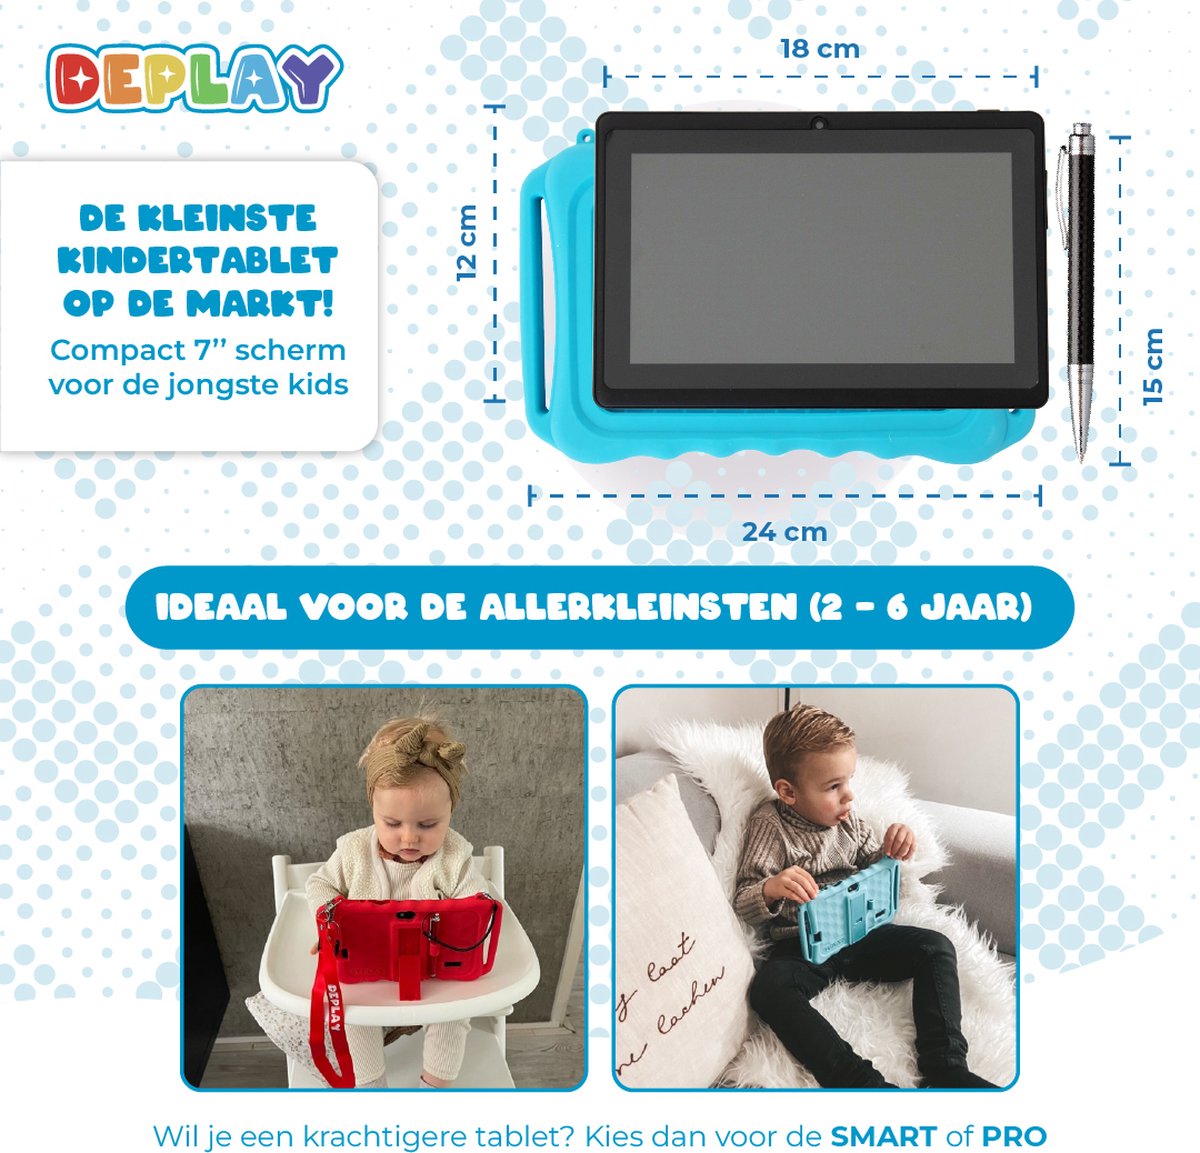 DePlay Kids Tablet - Kids Tablet - Application de contrôle parental -  Disney - Netflix